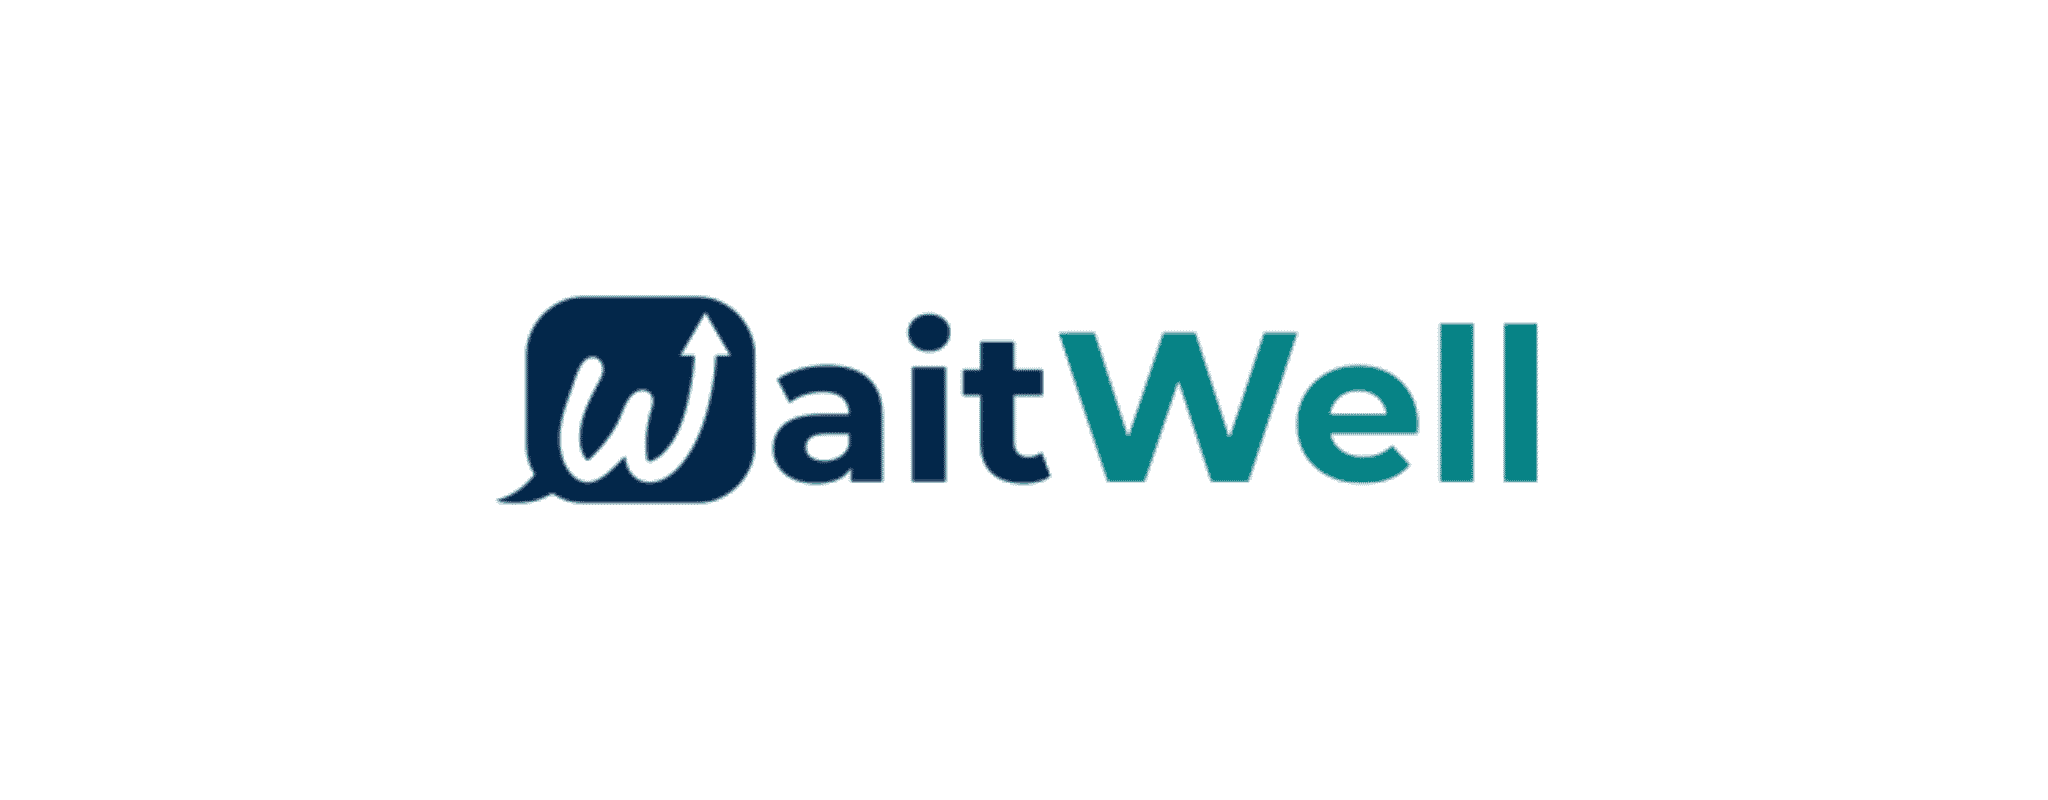 Waitwell logo